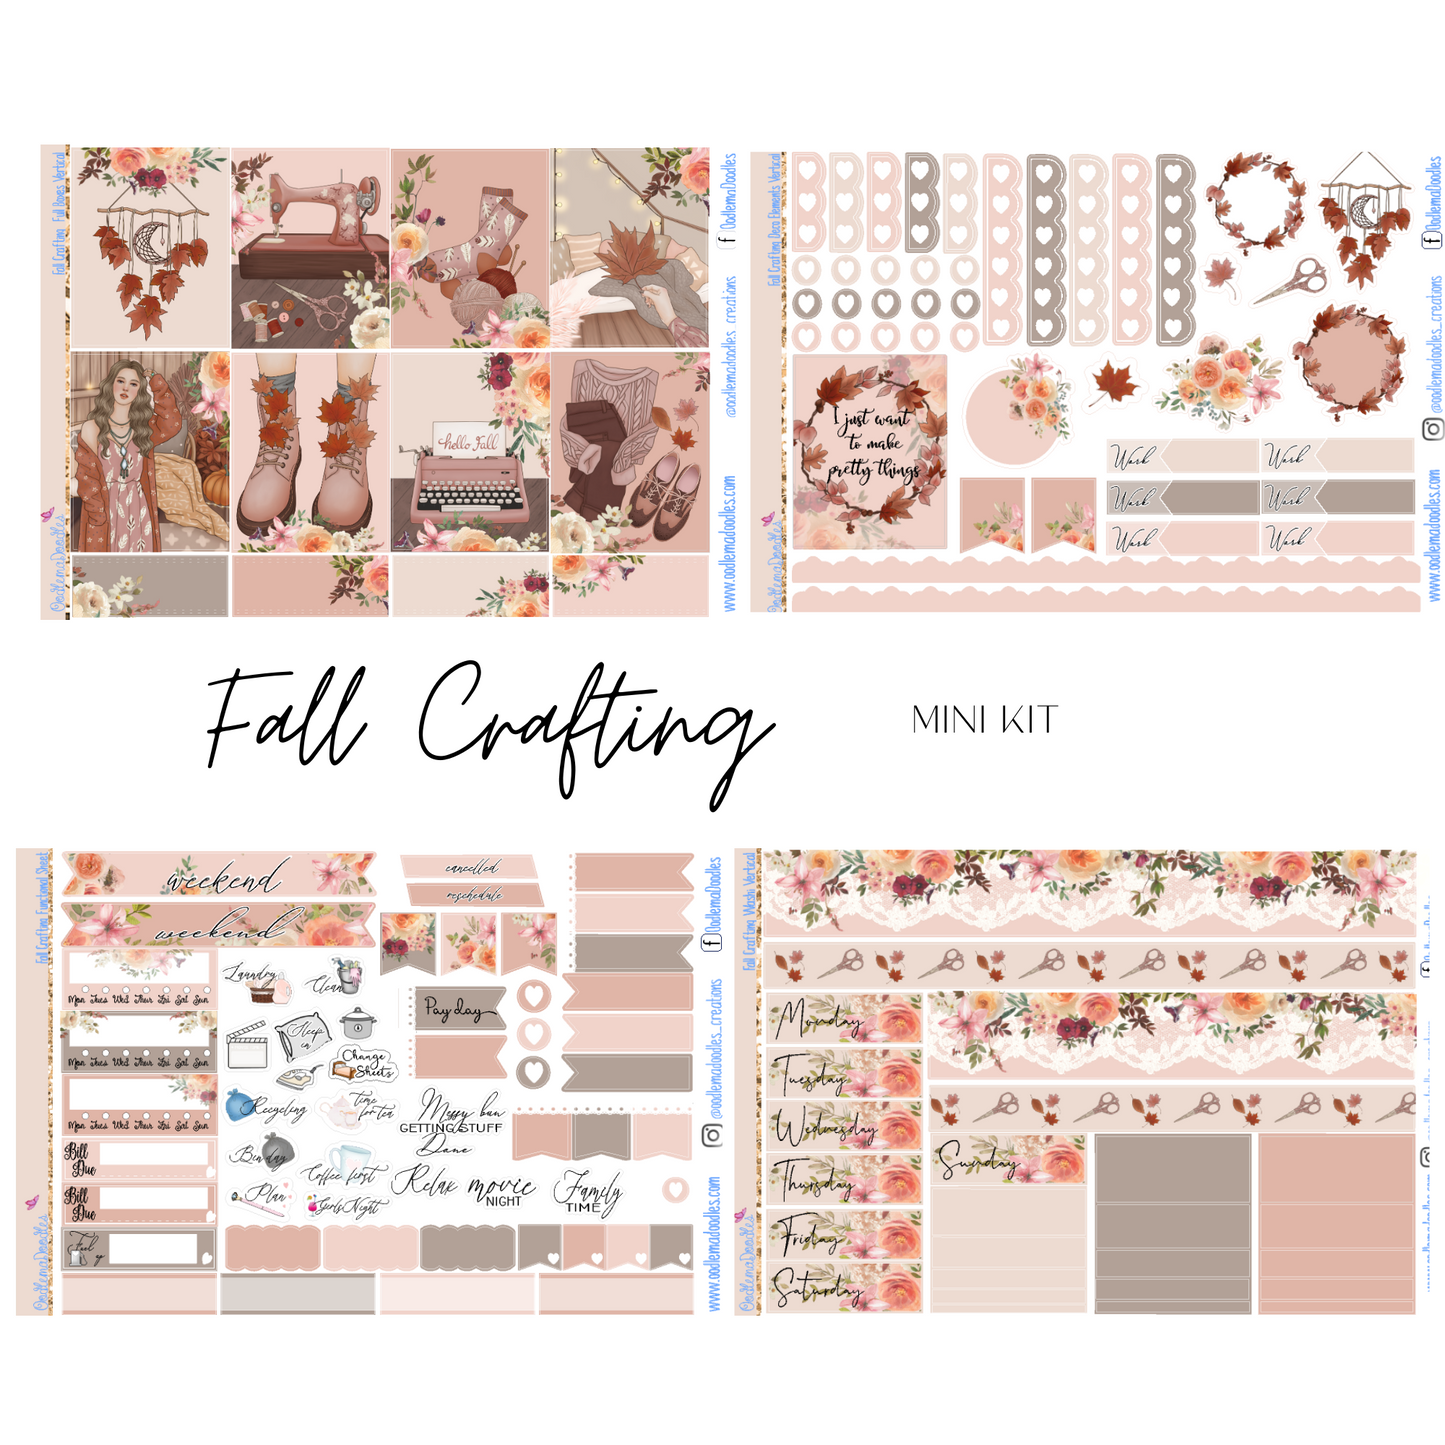 Fall Crafting Mini Kit